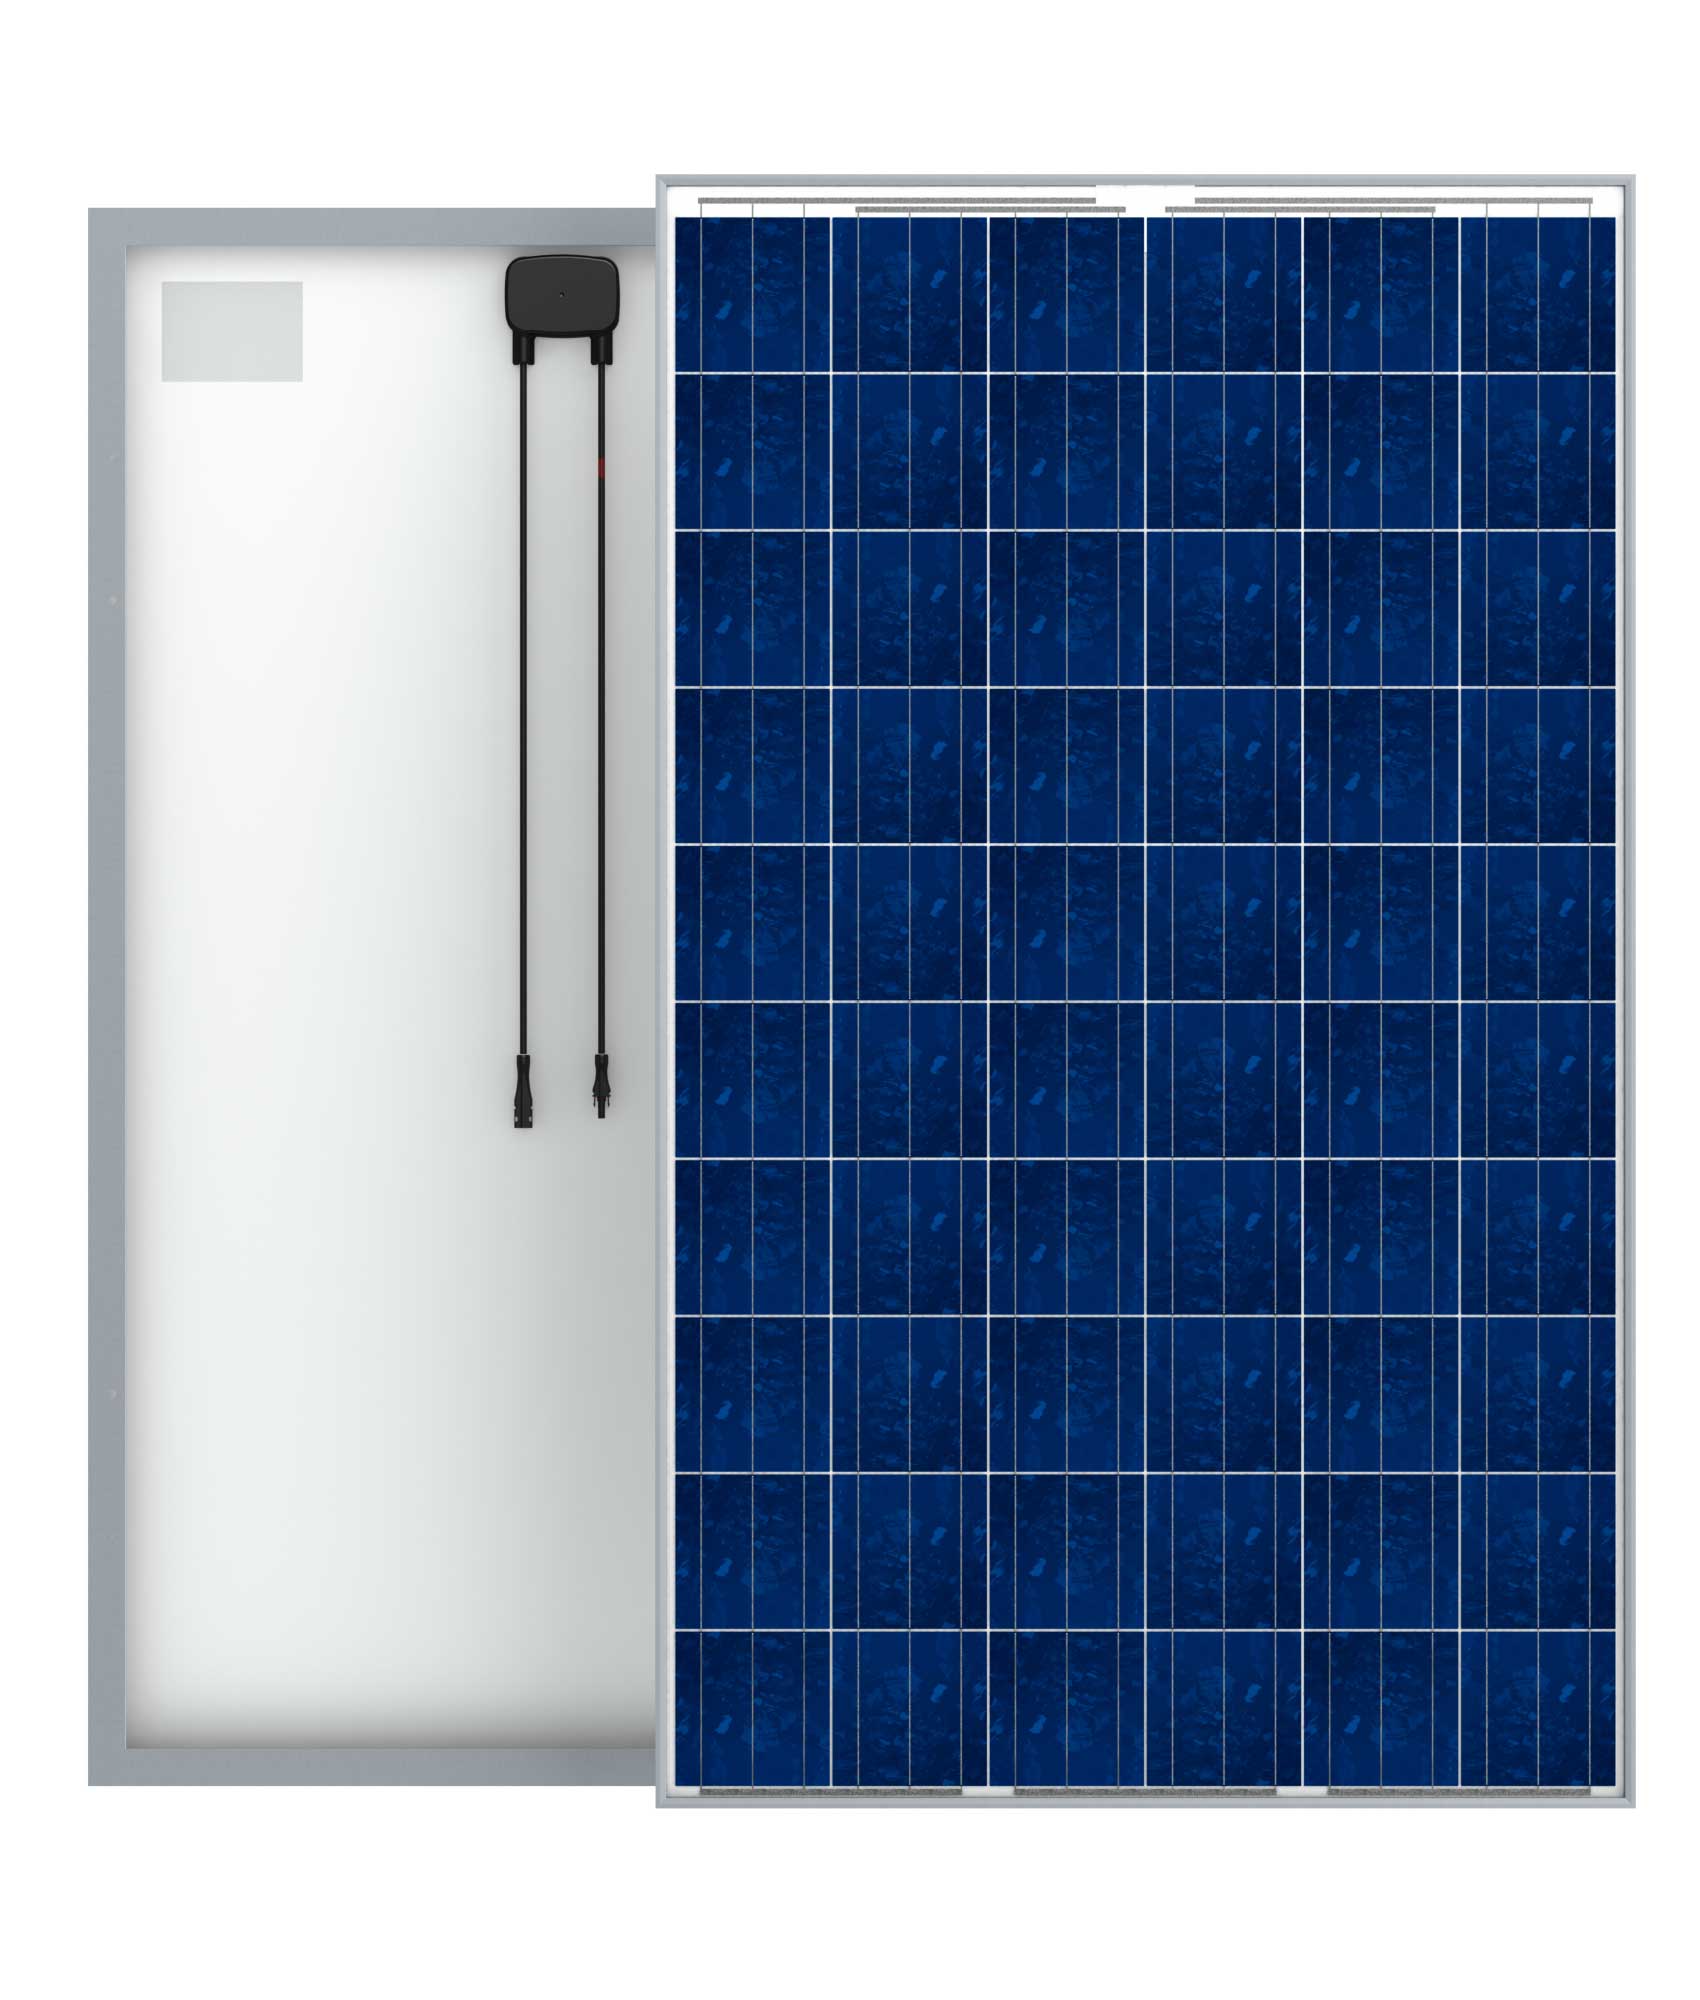 Solar photovoltaic module RZMP 60-260-P3W20